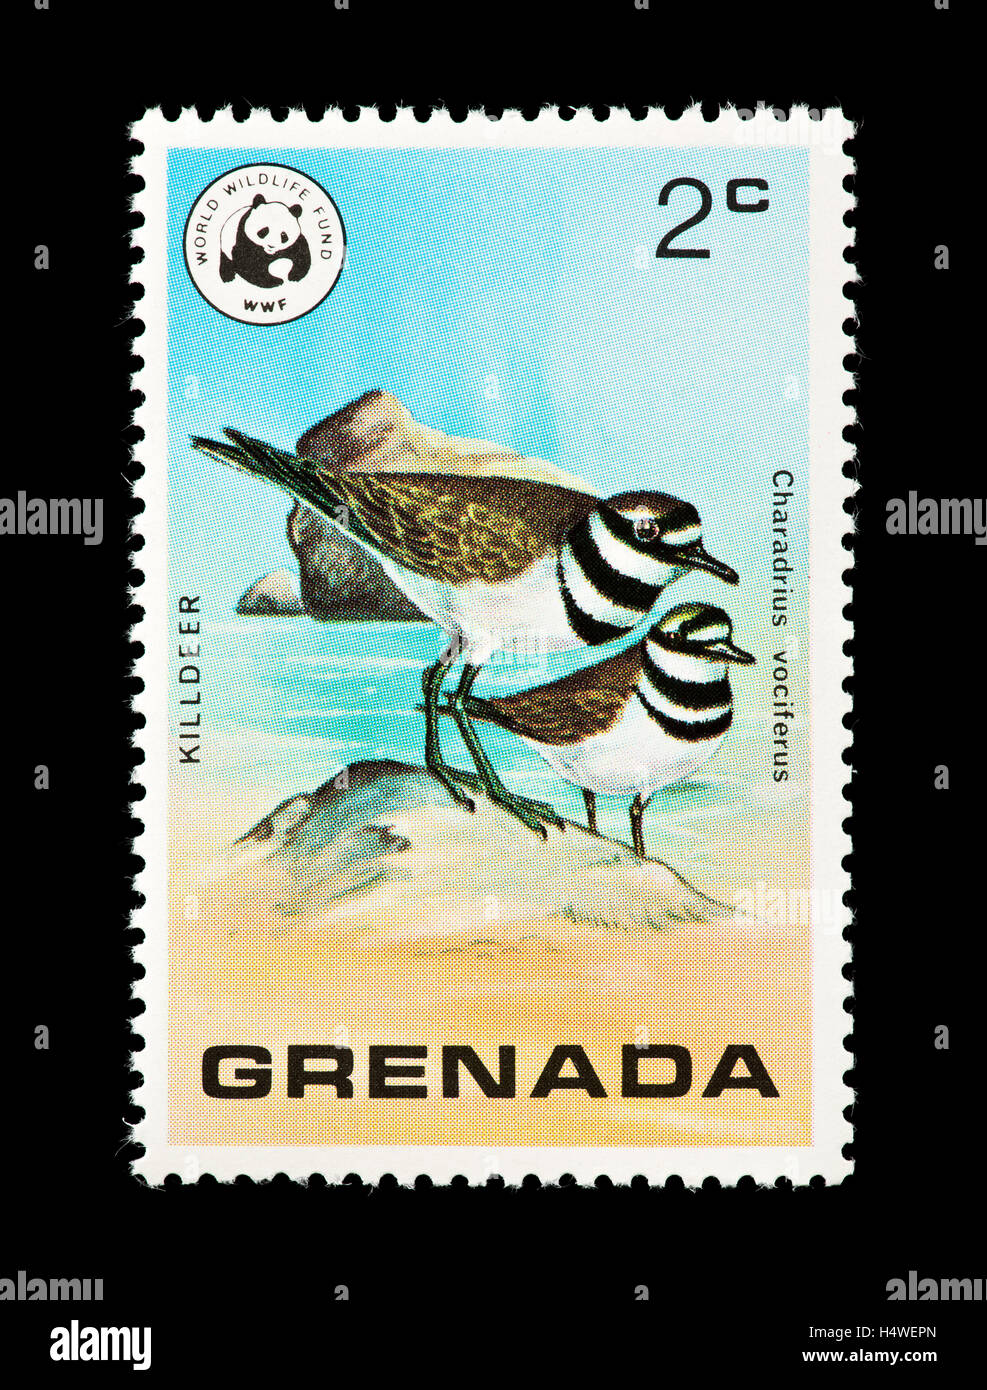 Postage stamp from Grenada depicting a killdeer (Charadrius vociferus) Stock Photo